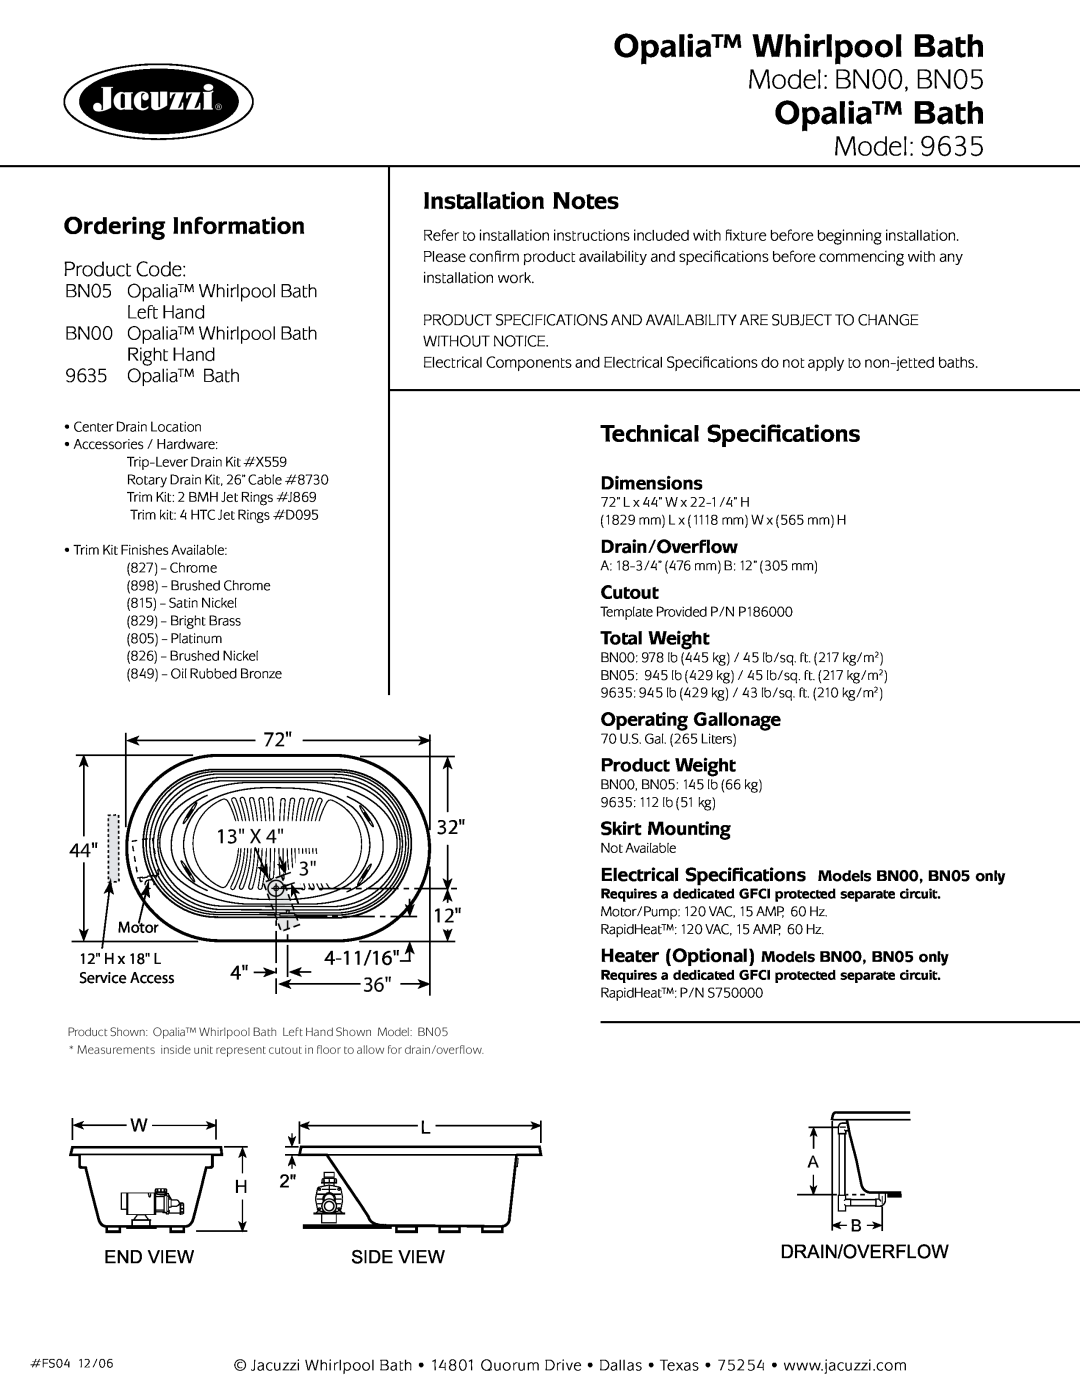 Jacuzzi 9635 Opalia Whirlpool Bath, Opalia Bath, Model BN00, BN05, Ordering Information, Installation Notes, Product Code 